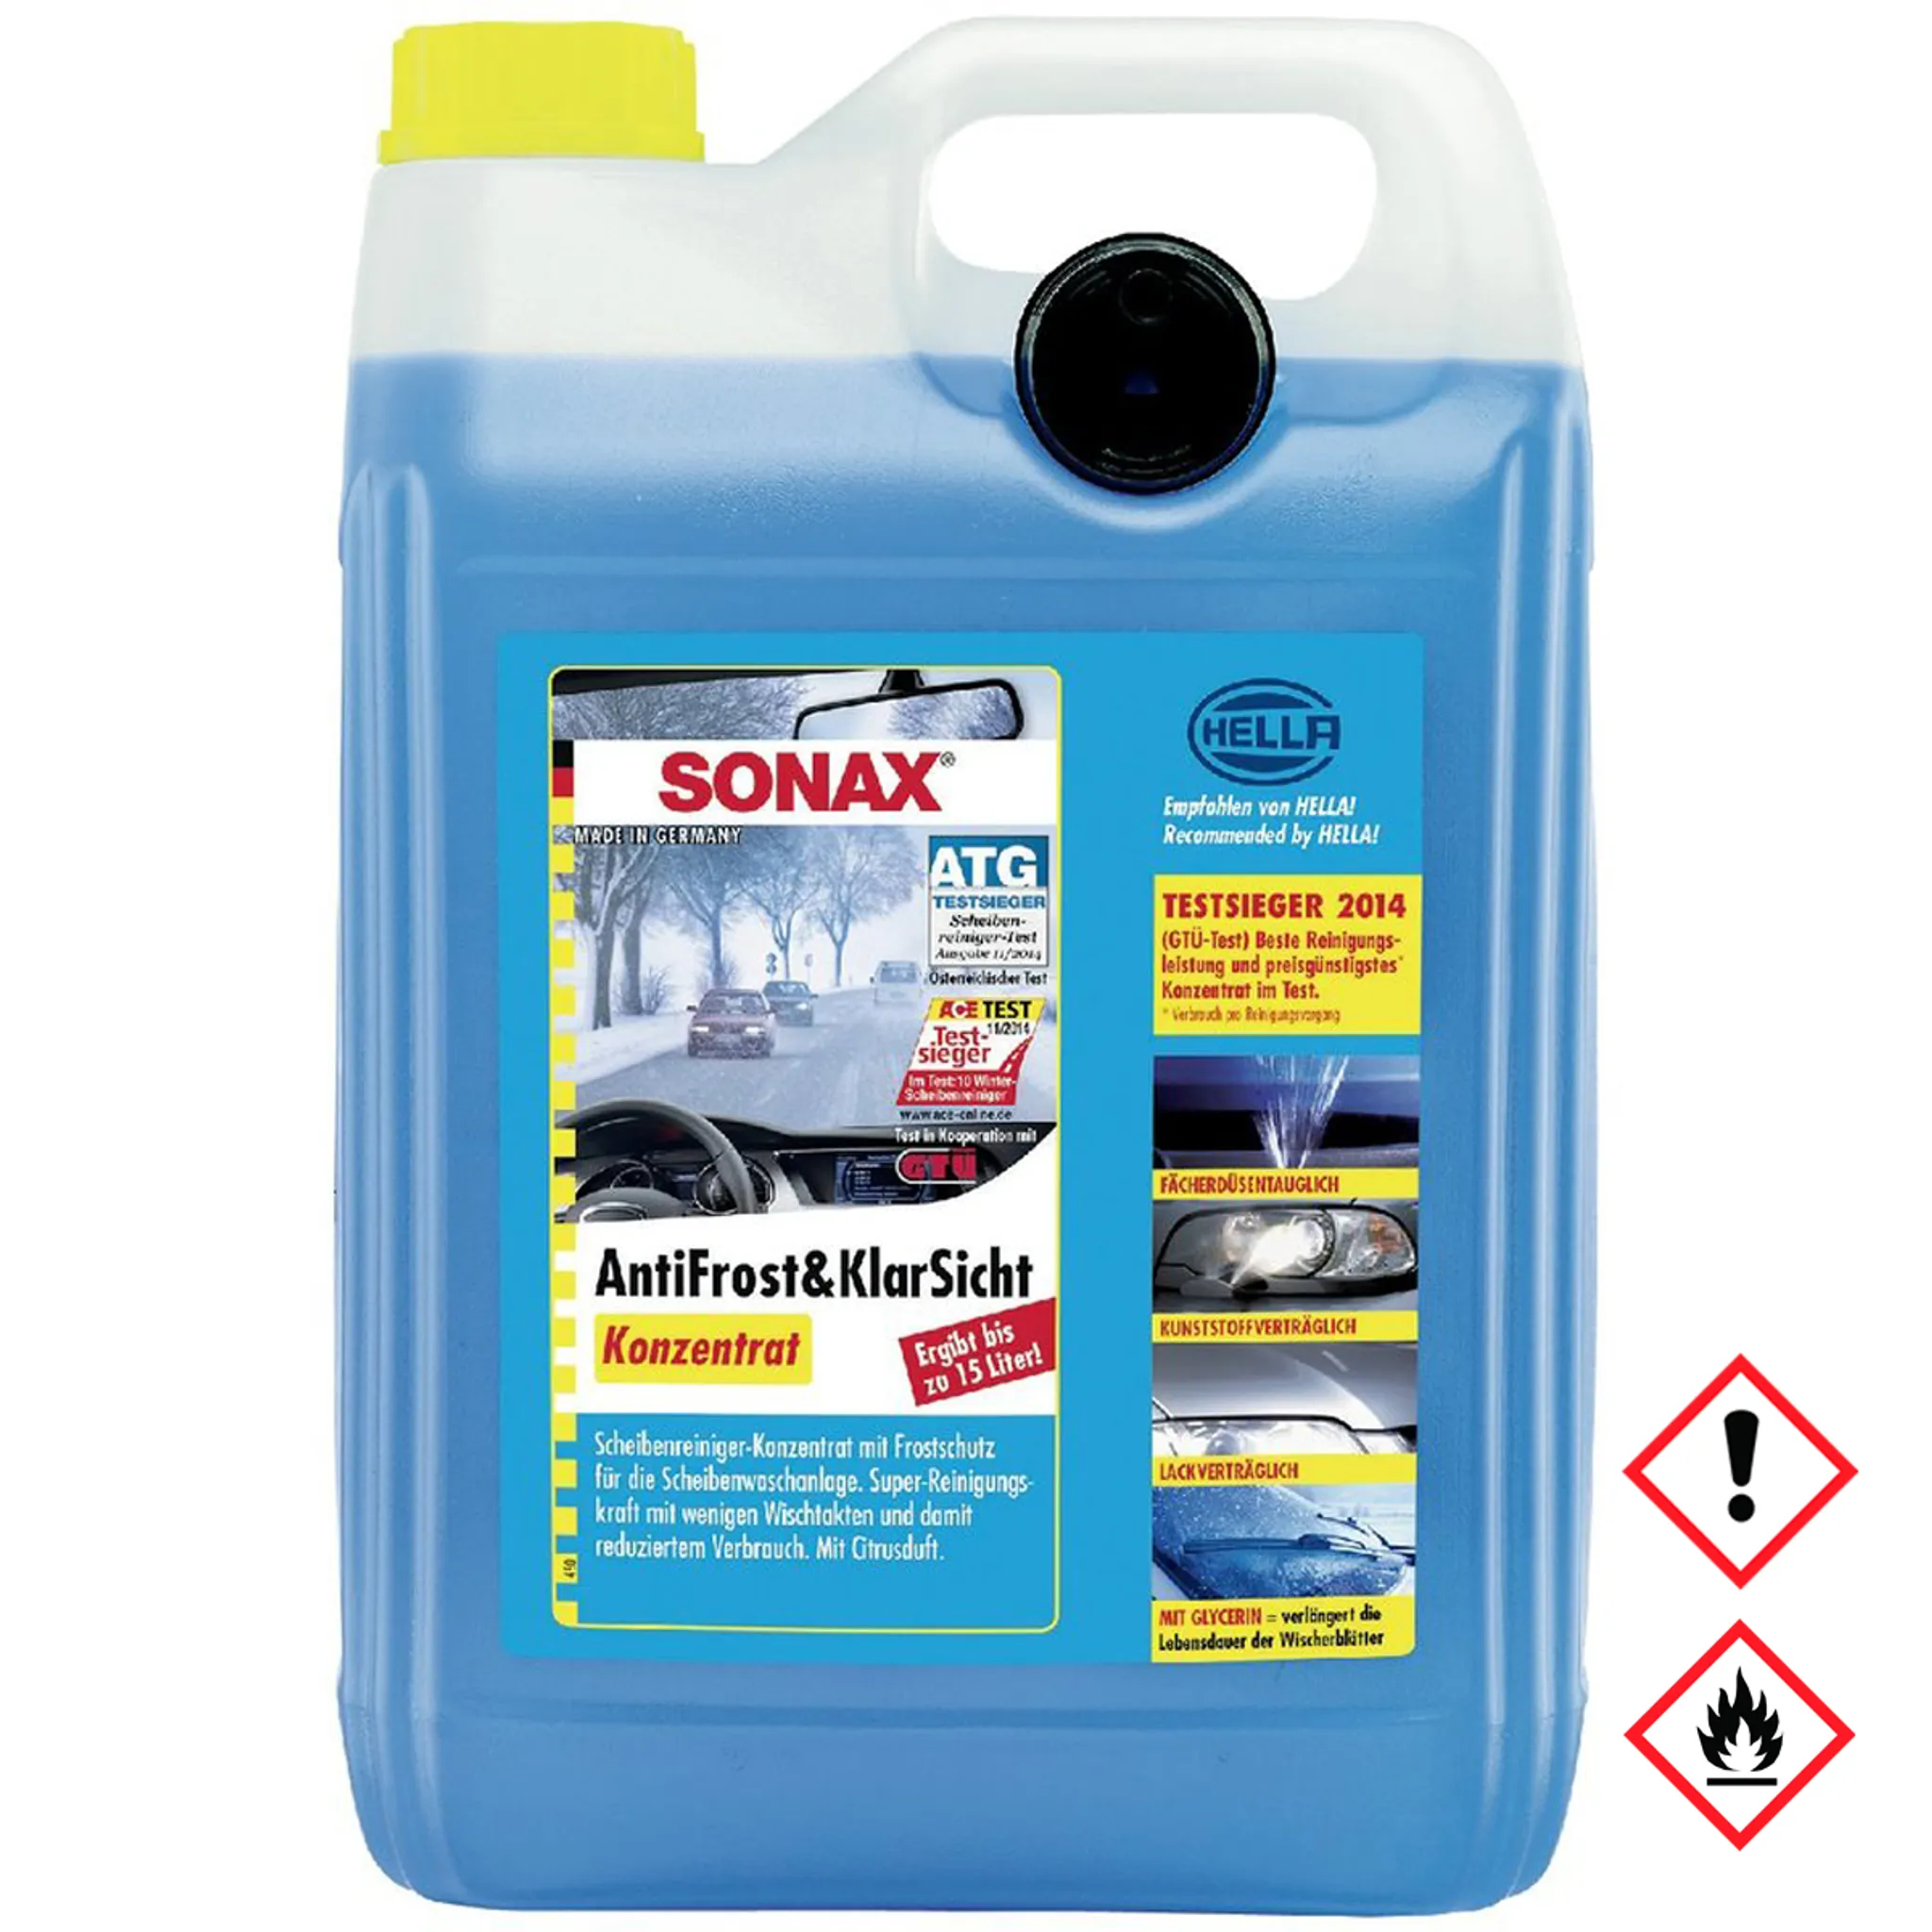 SONAX AutoWaschGel Konzentrat 2 L